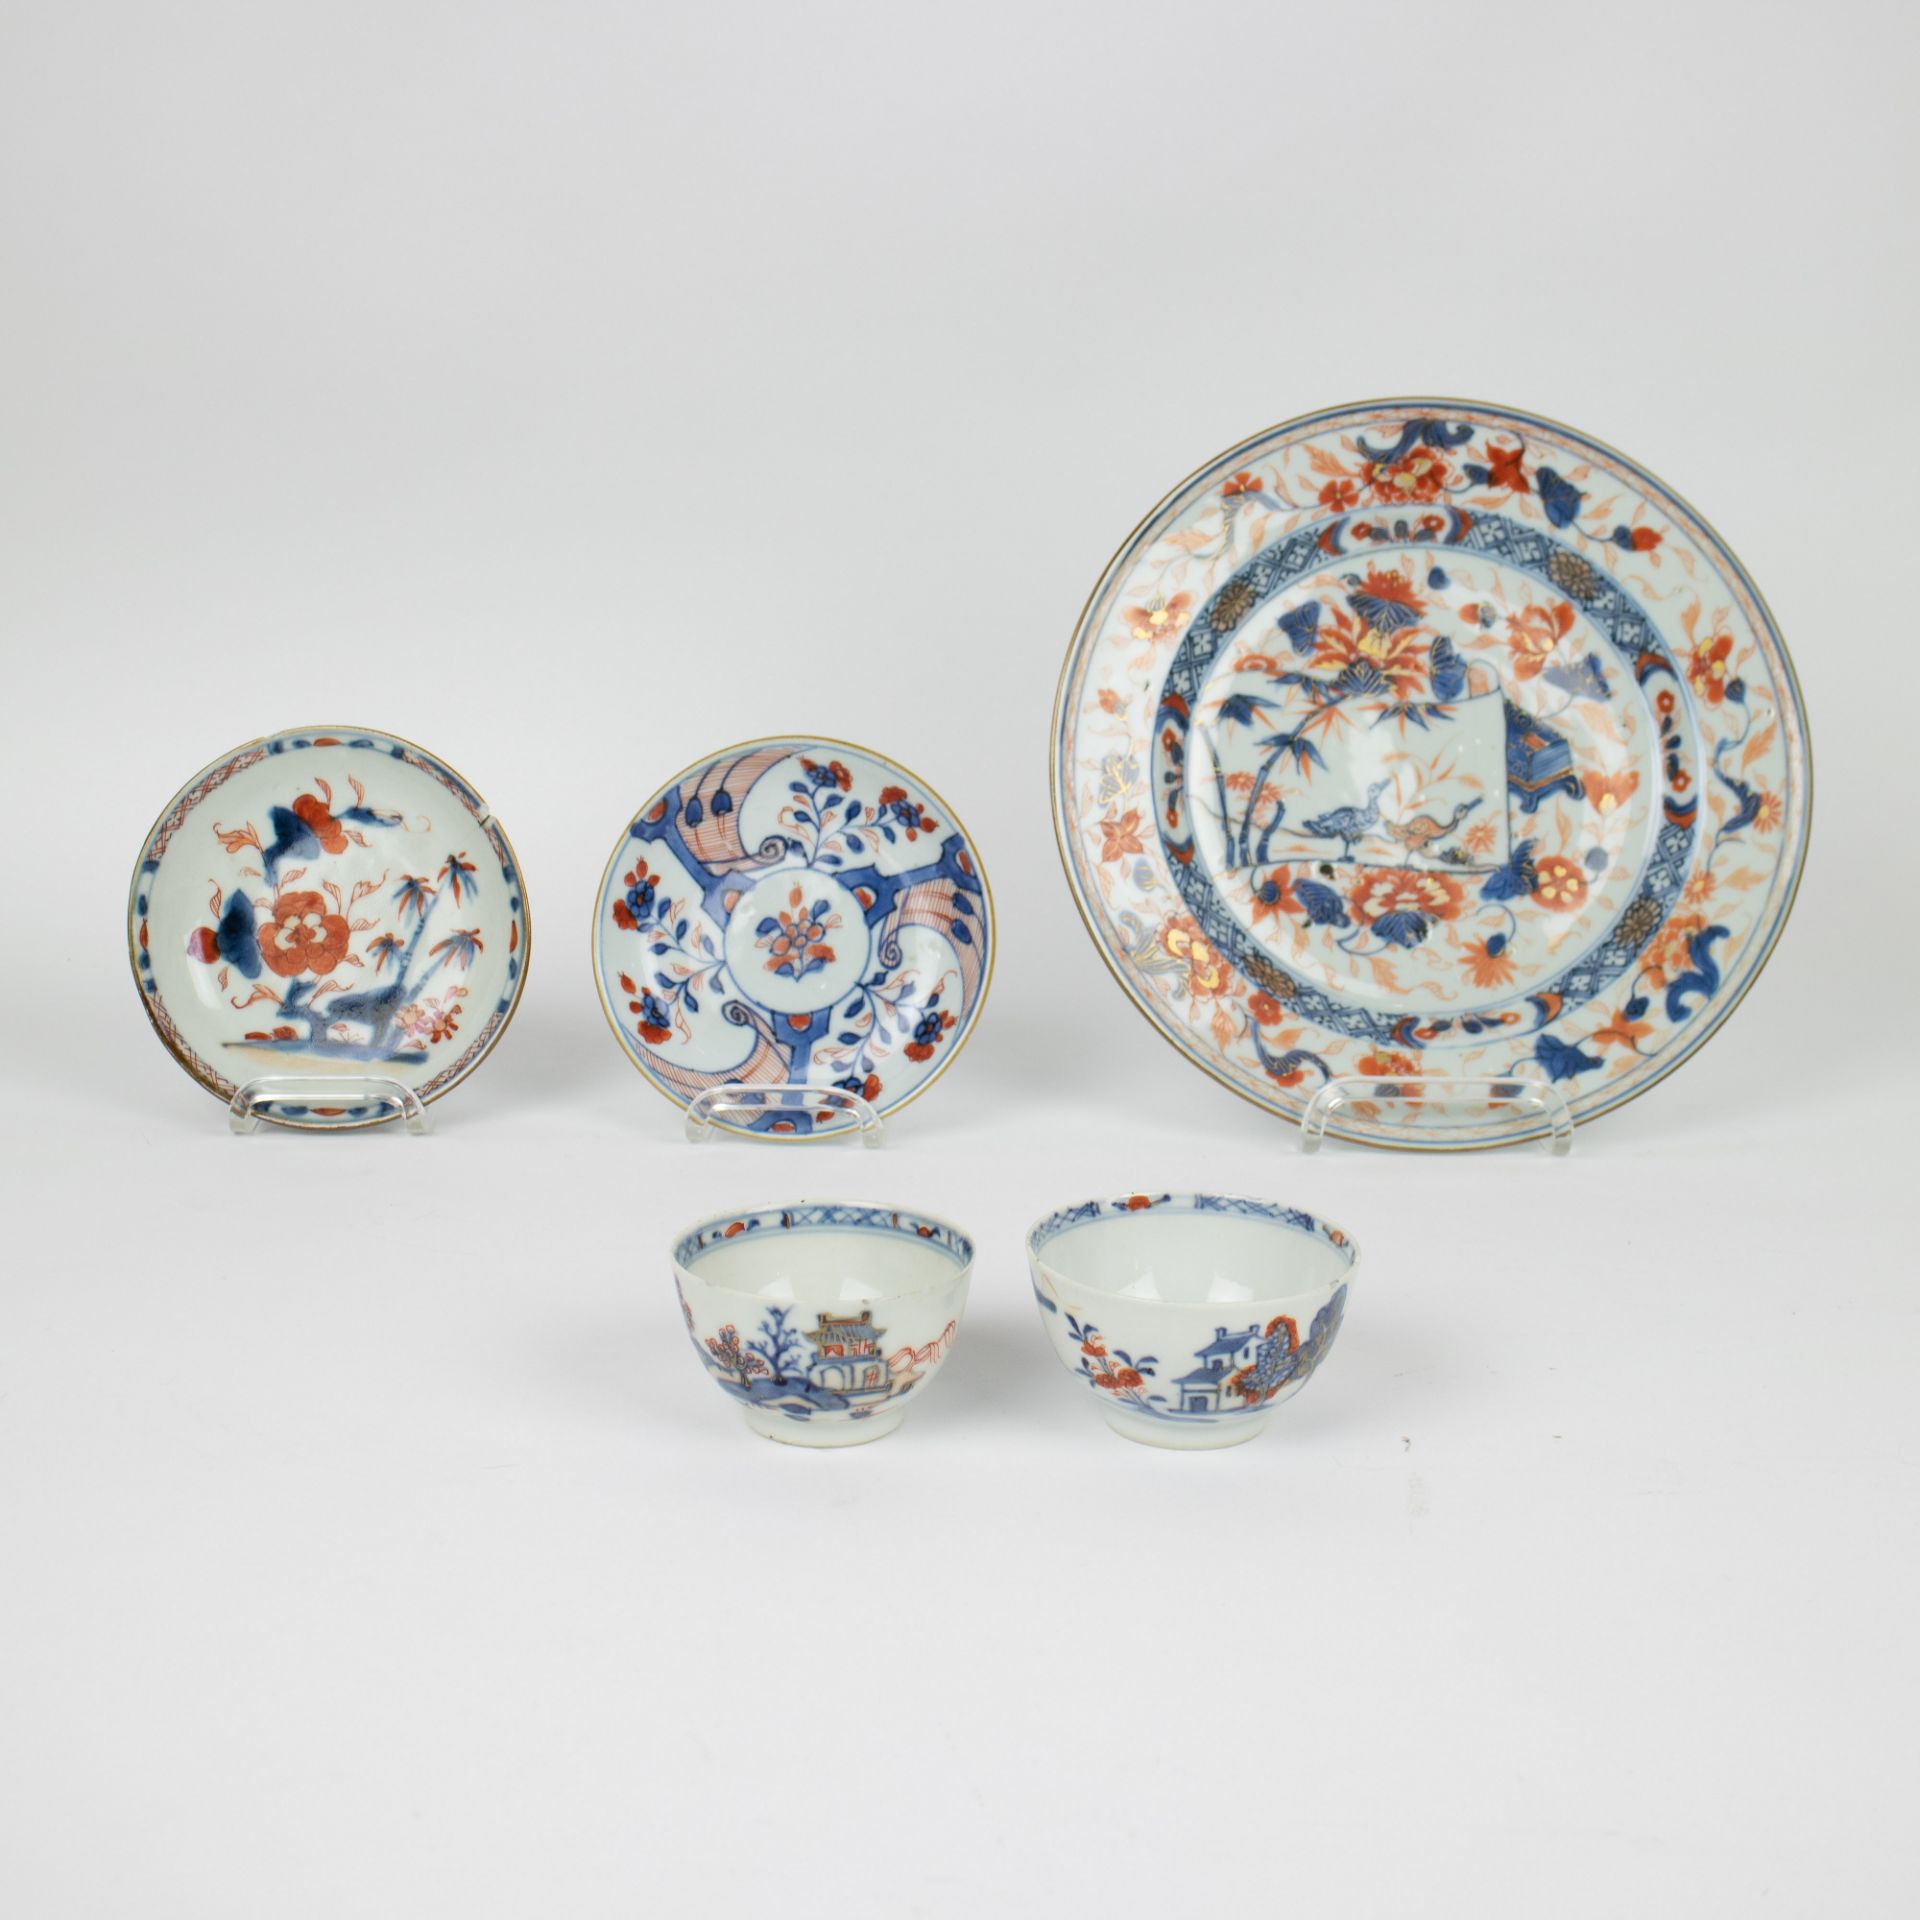 Chinese Imari porcelain, 18e century